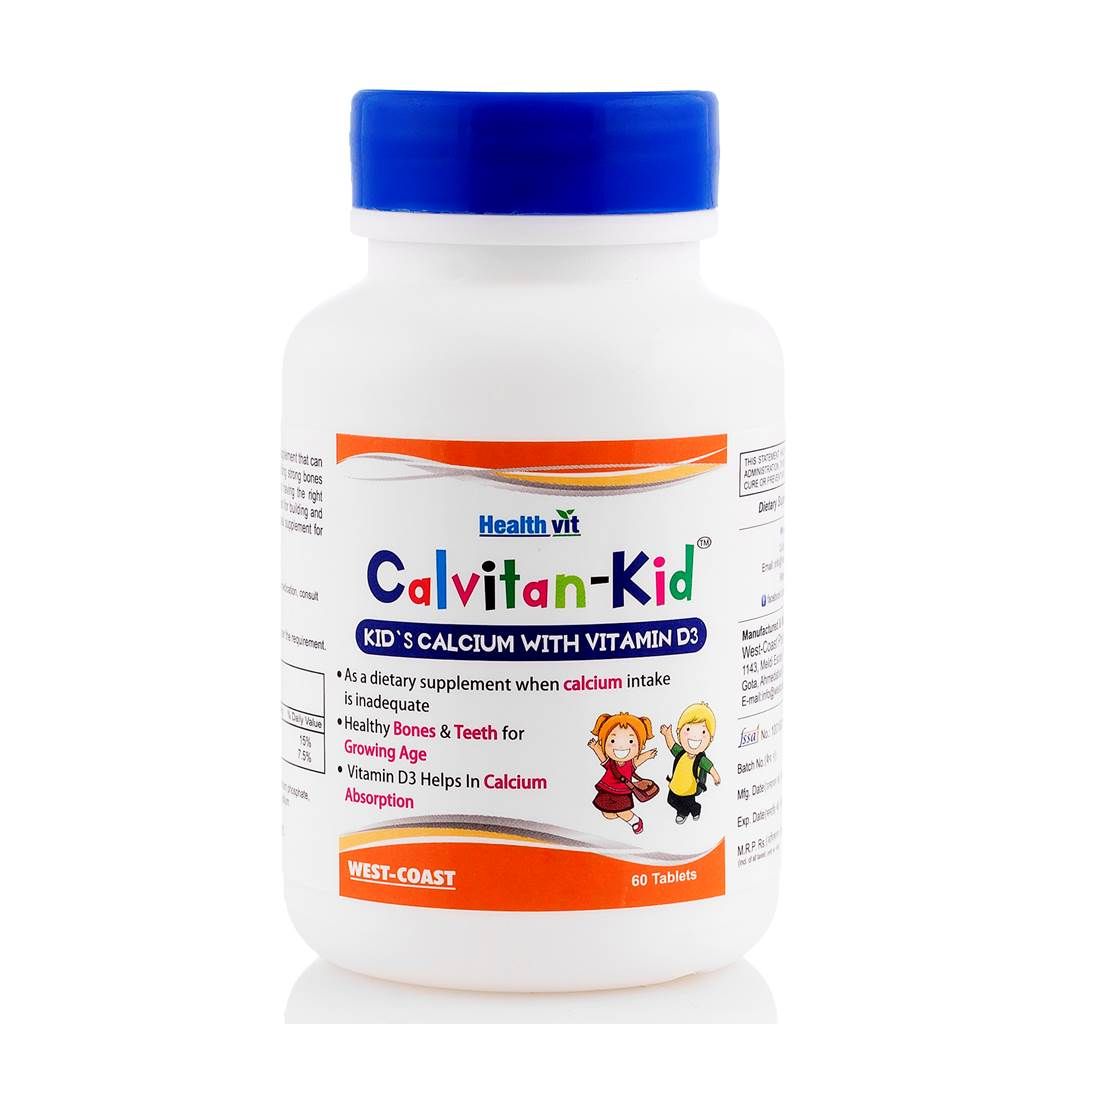 Healthvit Calvitan-Kid Kid's Calcium With Vitamin D3 60 Tablets